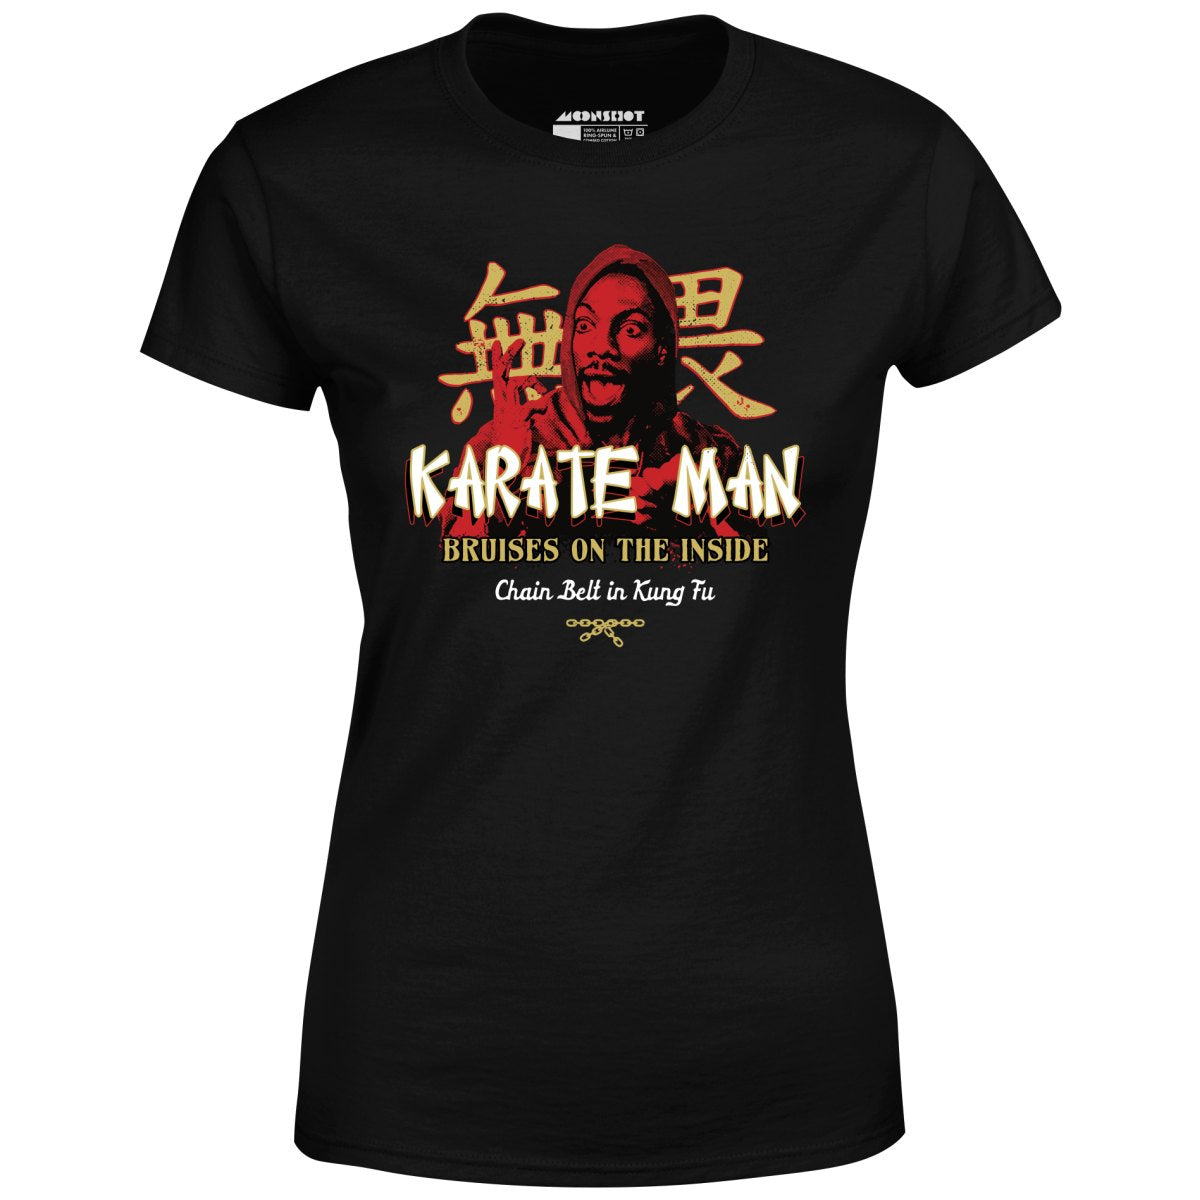 Karate Man - Chain Belt in Kung Fu - Women's T-Shirt